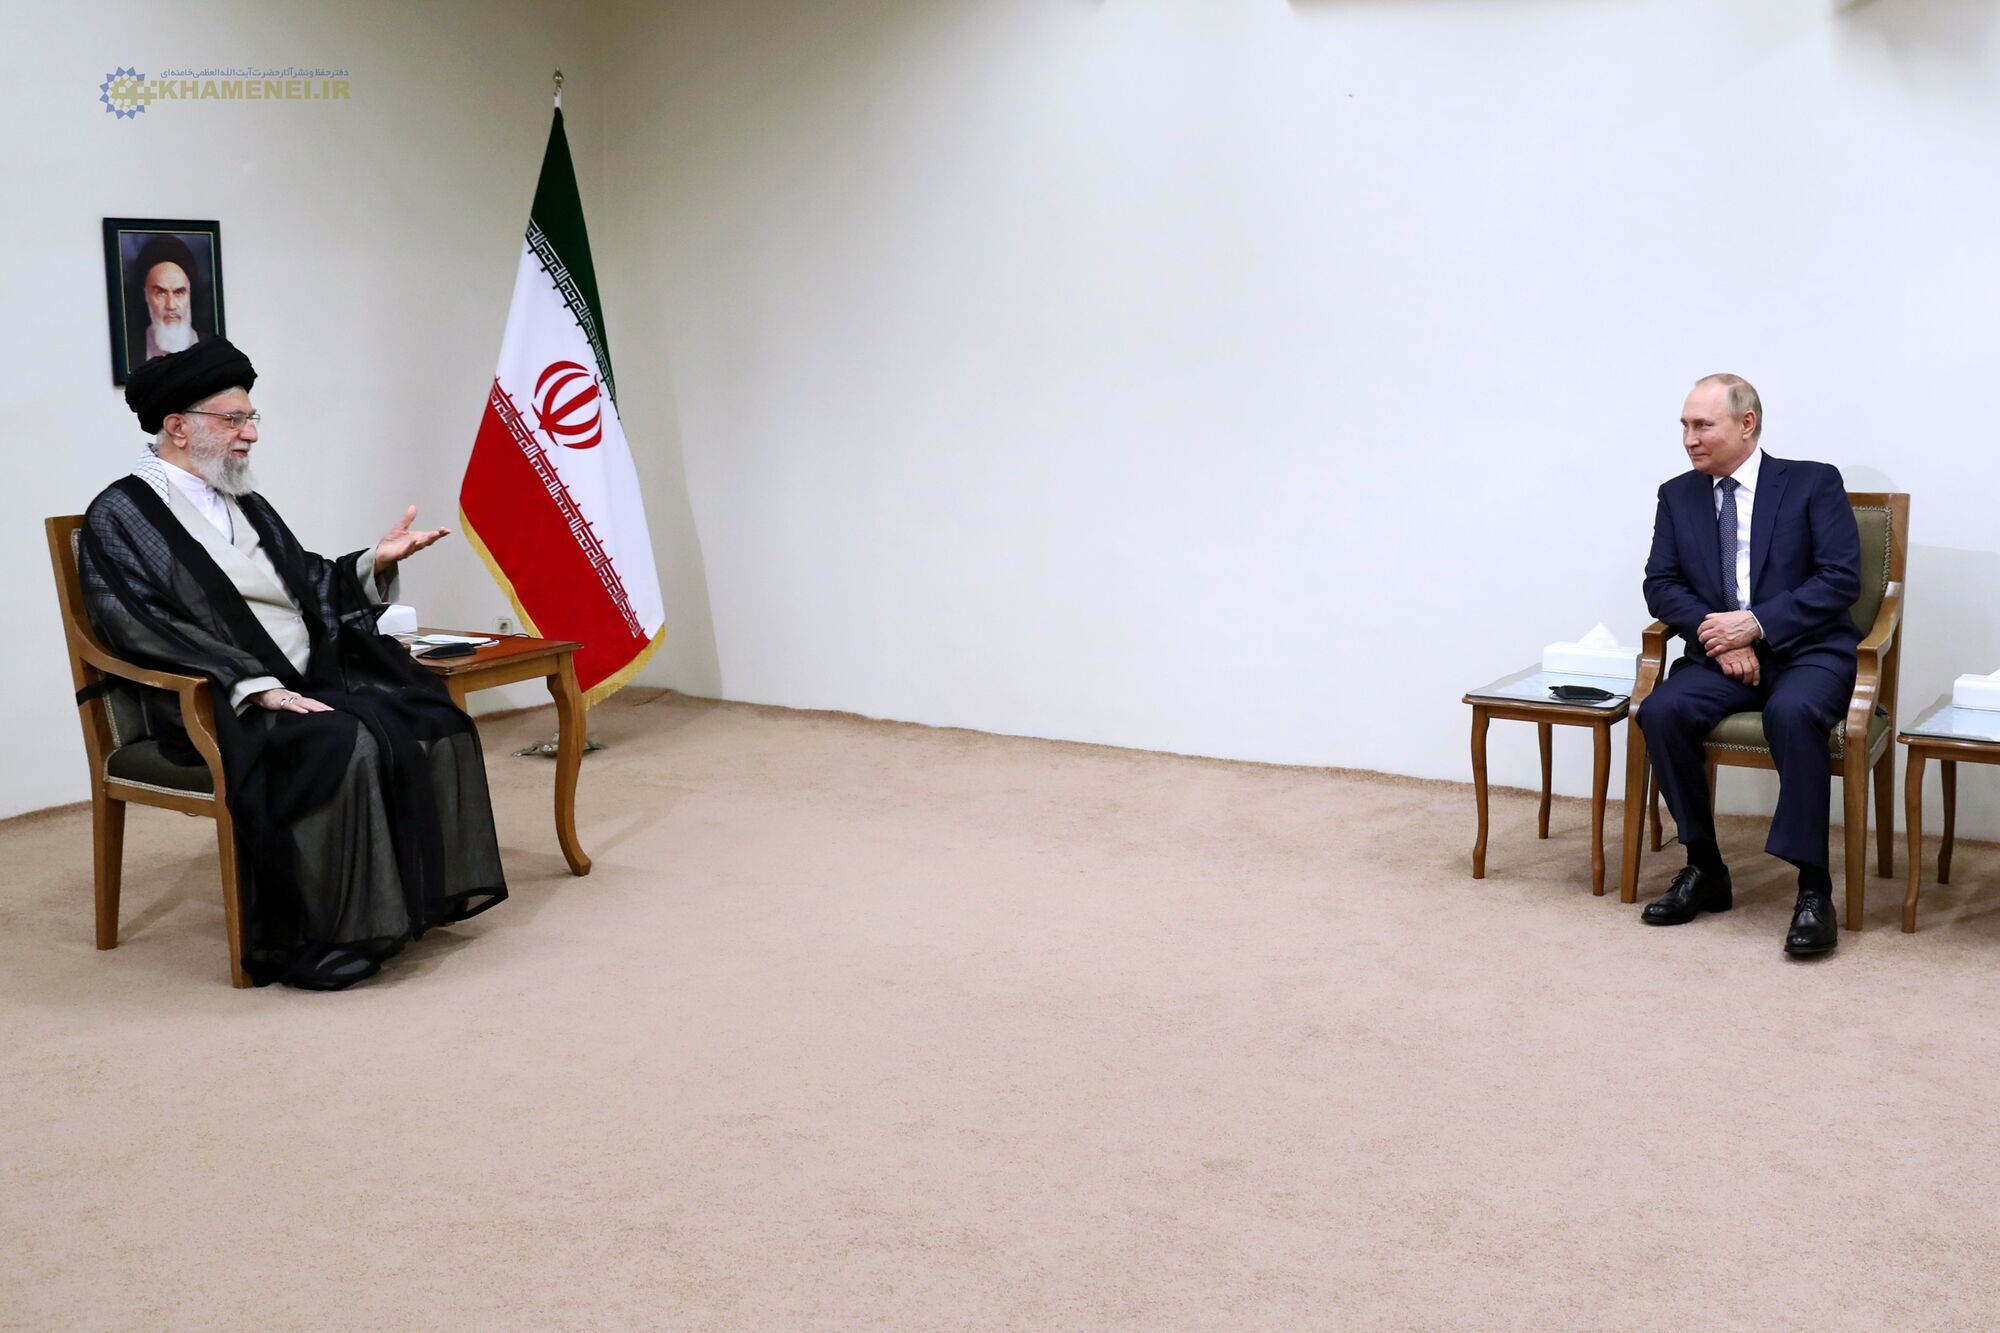 Али Хаменеи и Владимир Путин